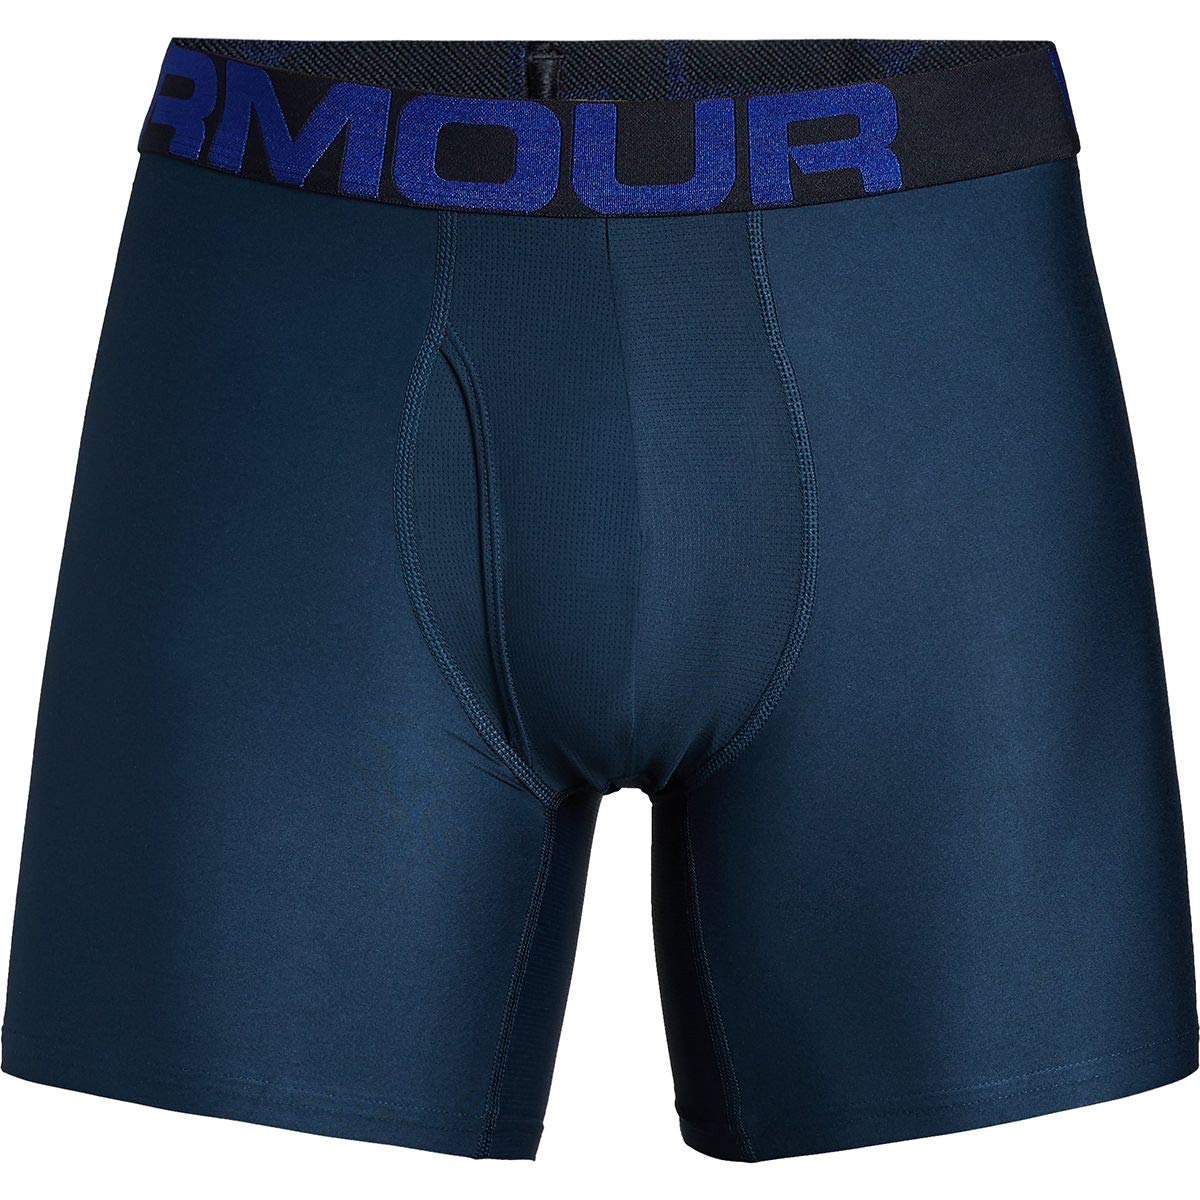 Under Armour Tech 6in Underwear - 2-Pack - Men's, Royal/Academy, Size ...